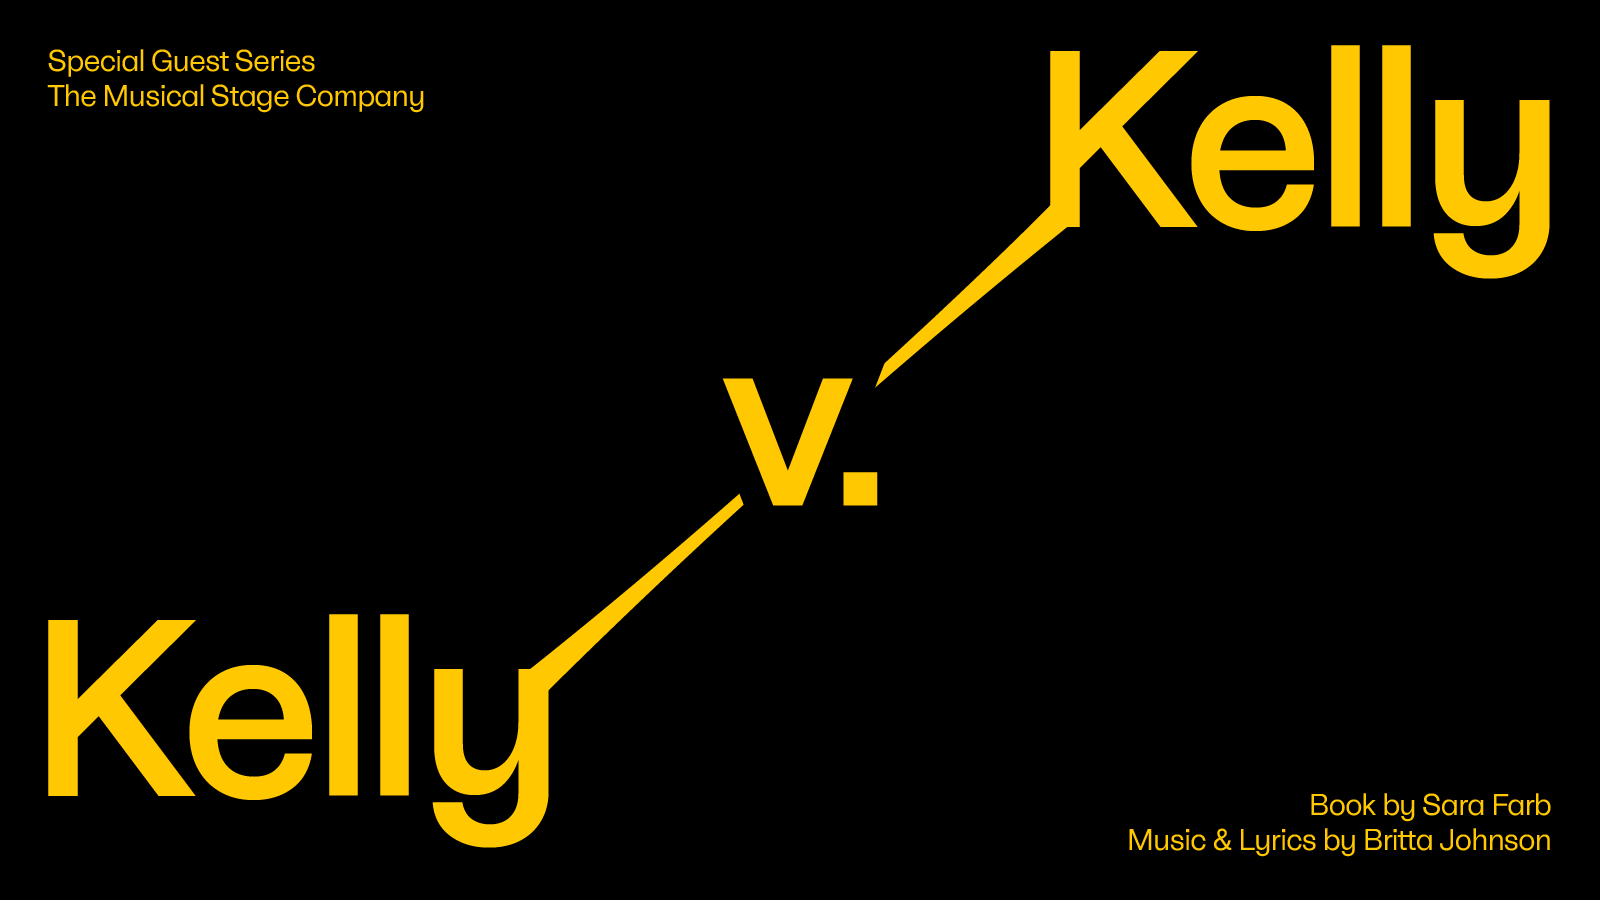 Kelly v. Kelly